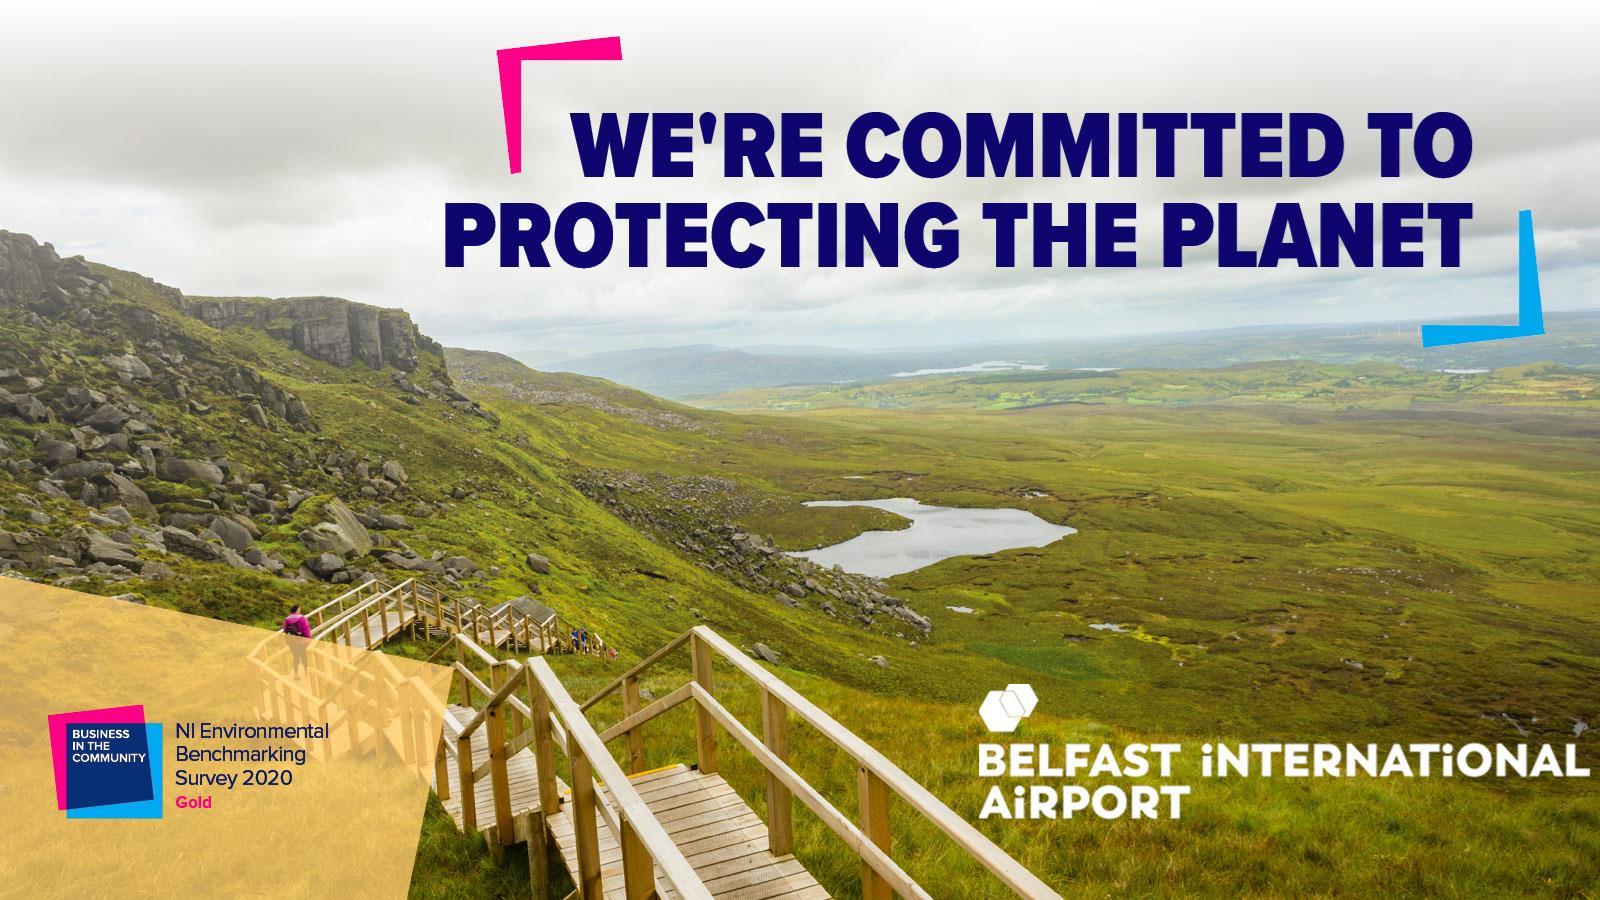 Belfast International Airport recognised for green leadership through NI Environmental Benchmarking Survey